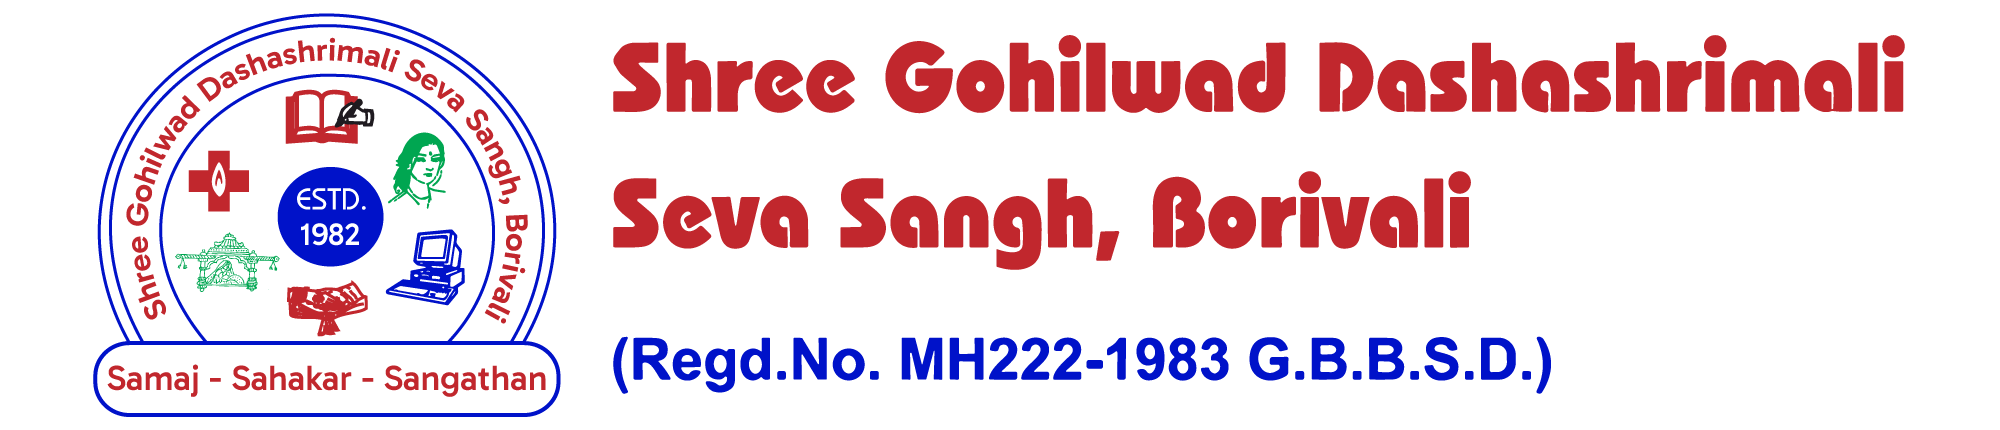  WELCOME TO SHREE GOHILWAD DASHASHRIMALI SEVA SANGH, BORIVALI